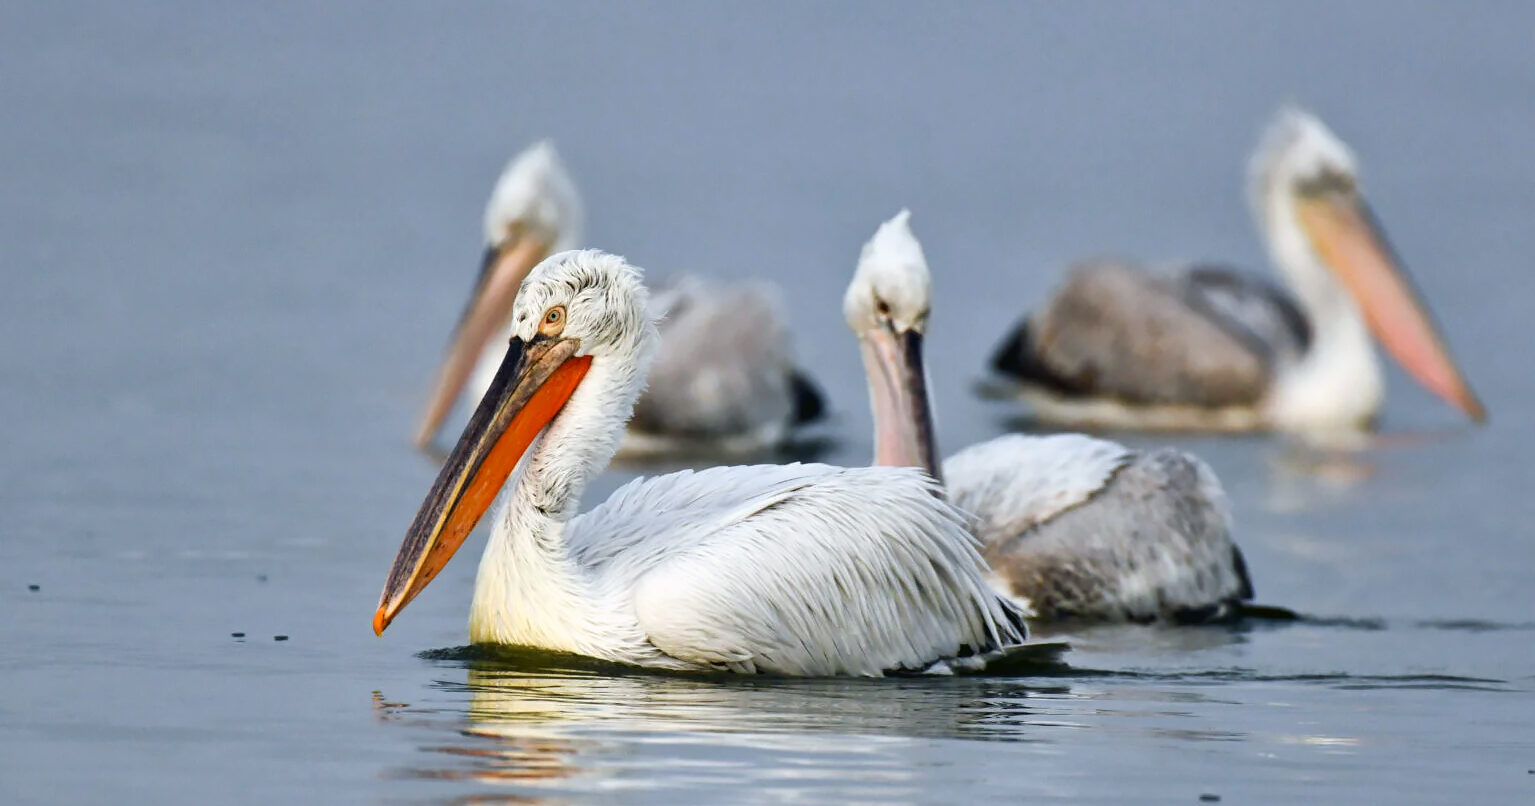 Winter counts in Romania reveal positive trend in Dalmatian pelican population